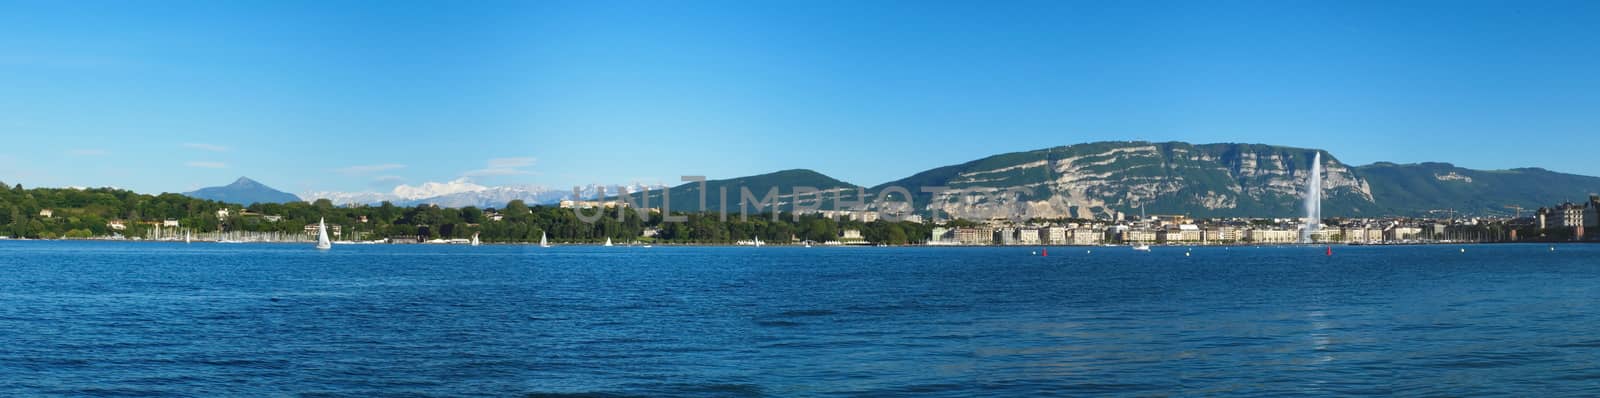 Panoramic view of Geneva area, Switzerland by Elenaphotos21